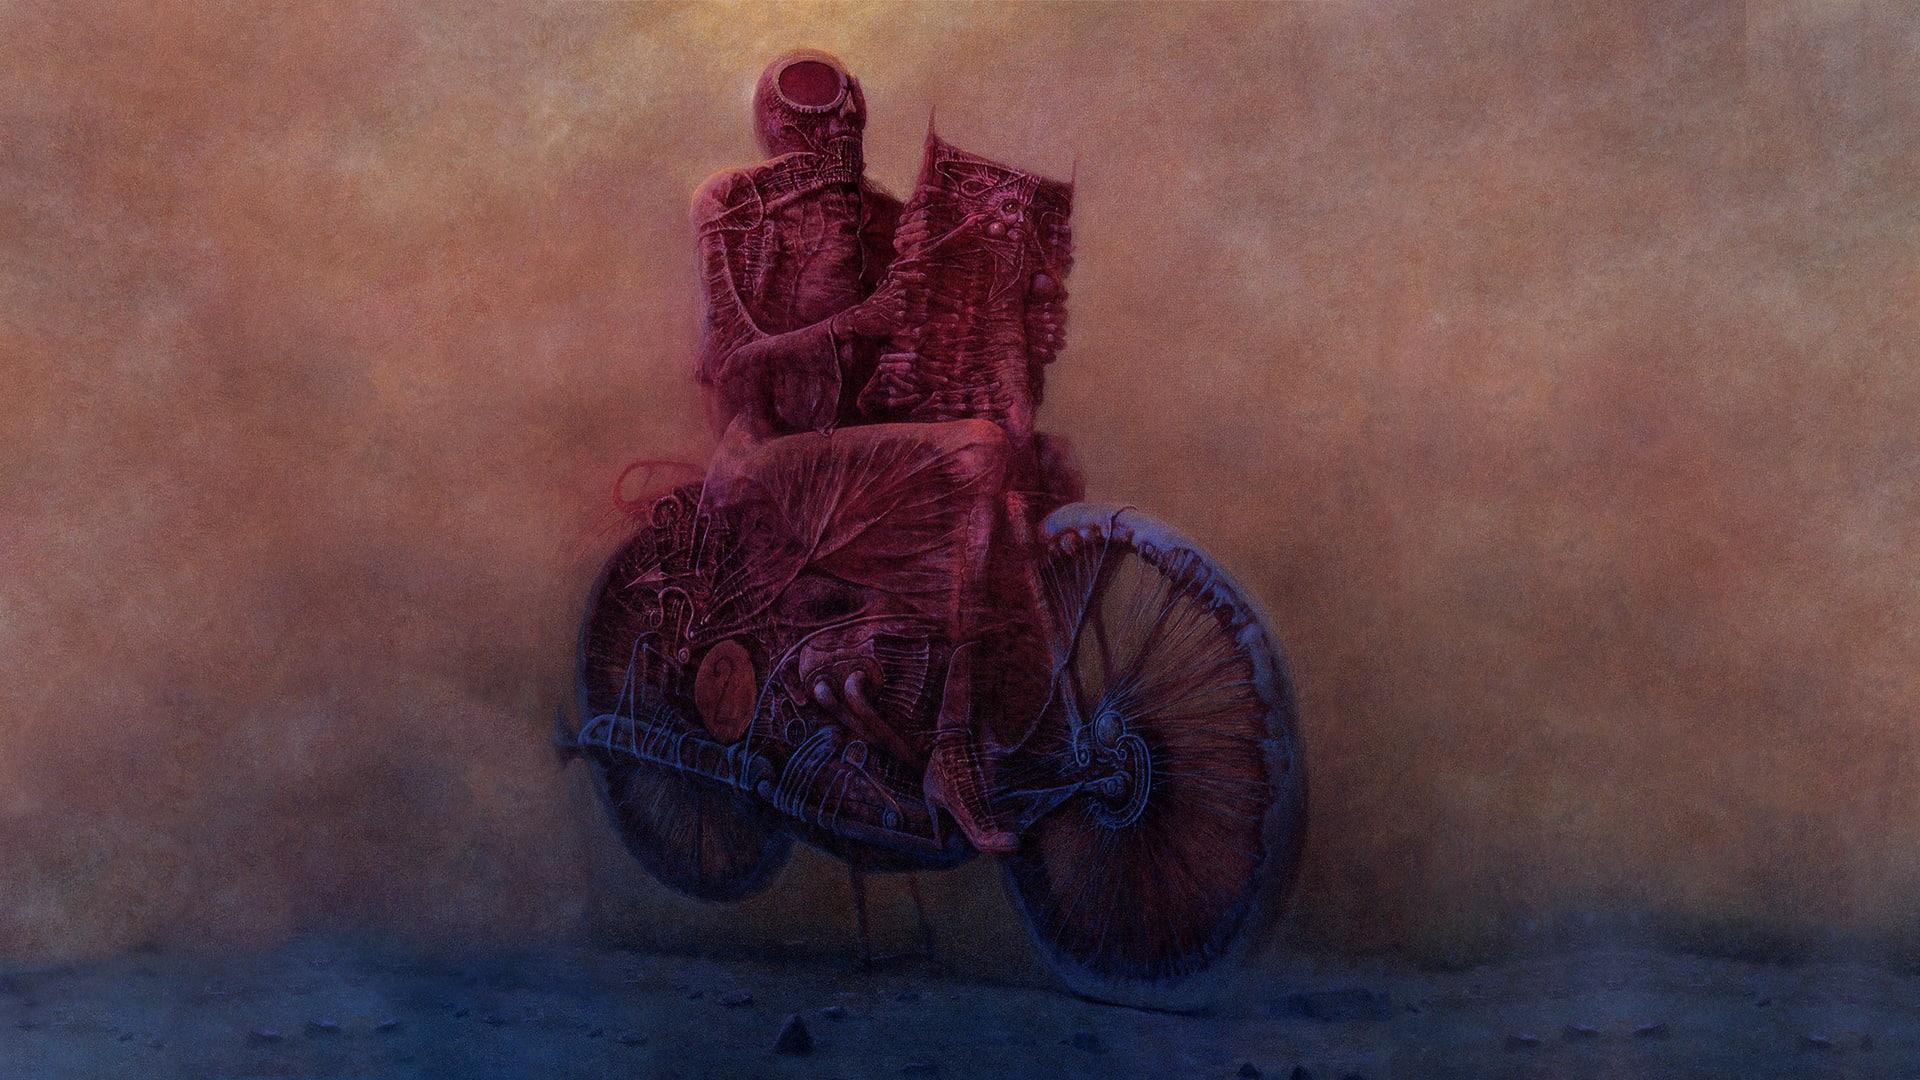 HD wallpaper: Zdzisław Beksiński, fantastic realism, creepy